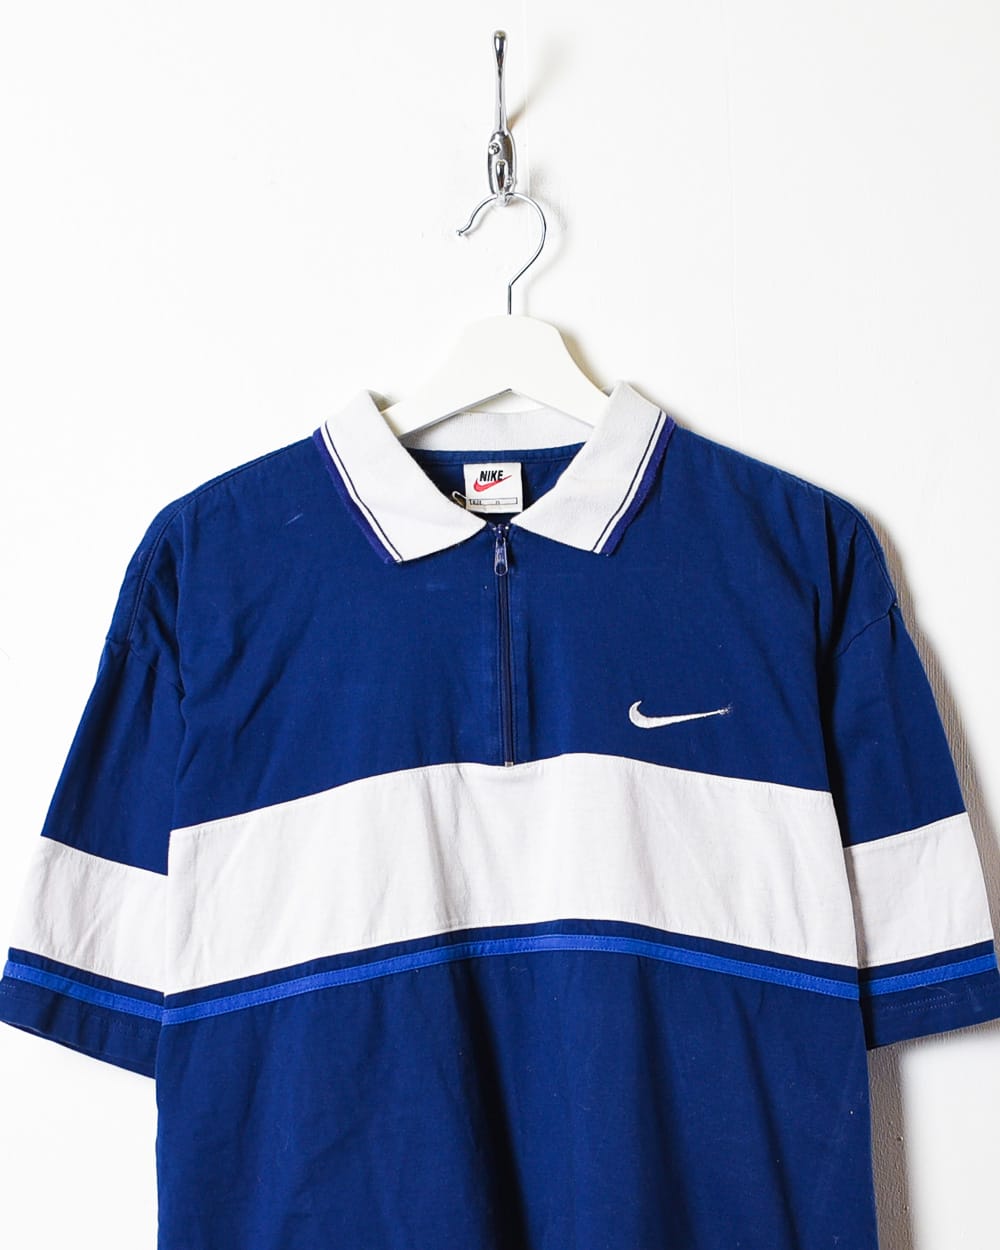 Navy Nike 1/4 Zip Polo Shirt - Medium